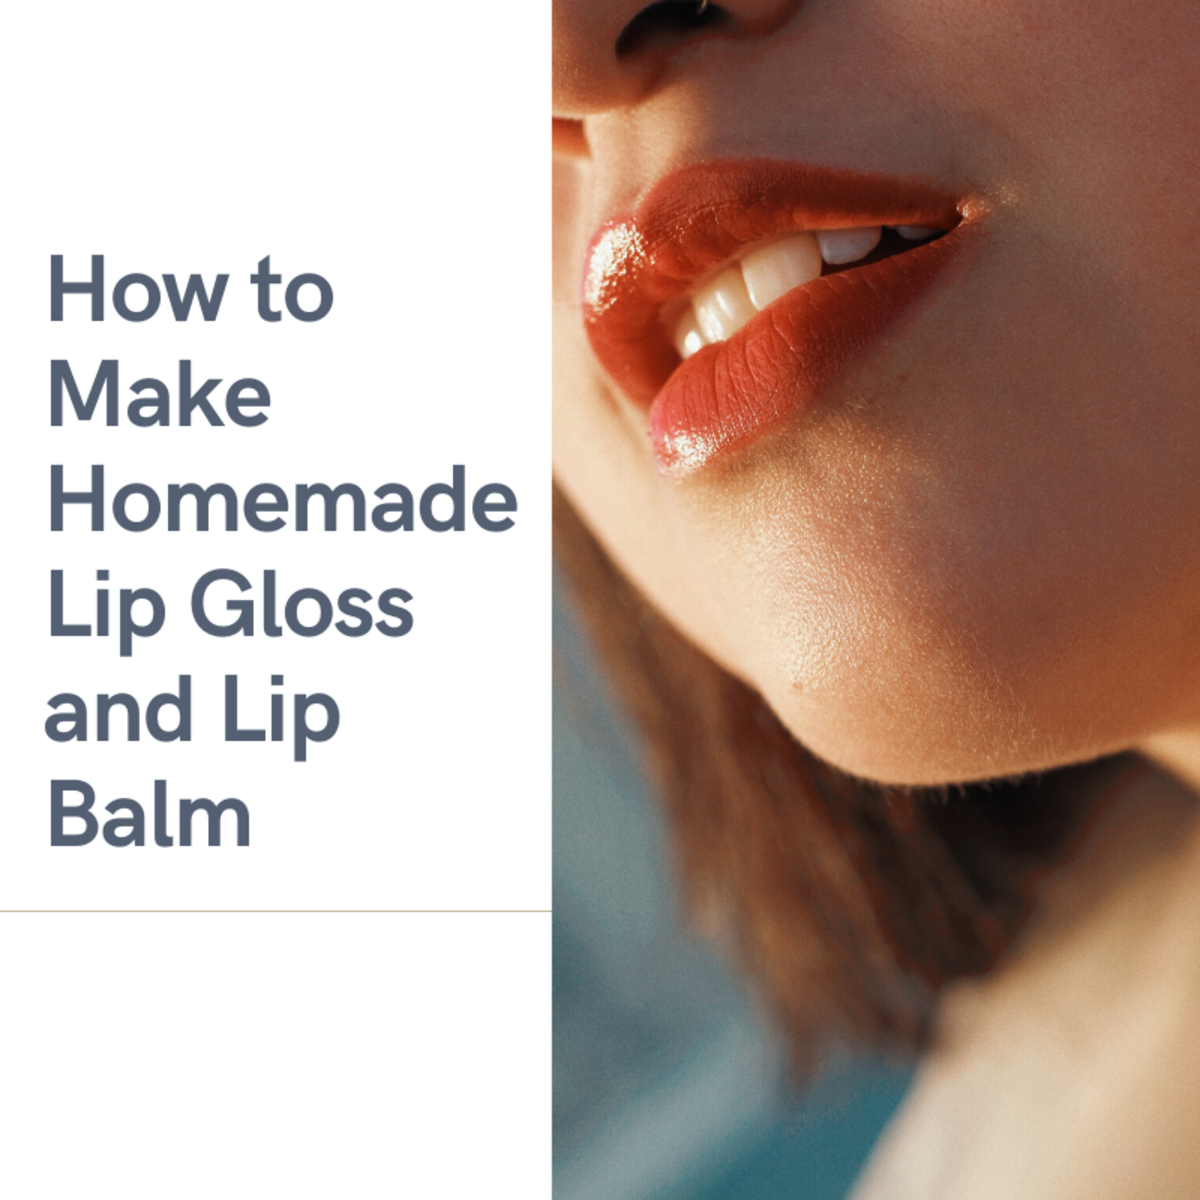 How to Make Homemade Lip Gloss and Lip Balm